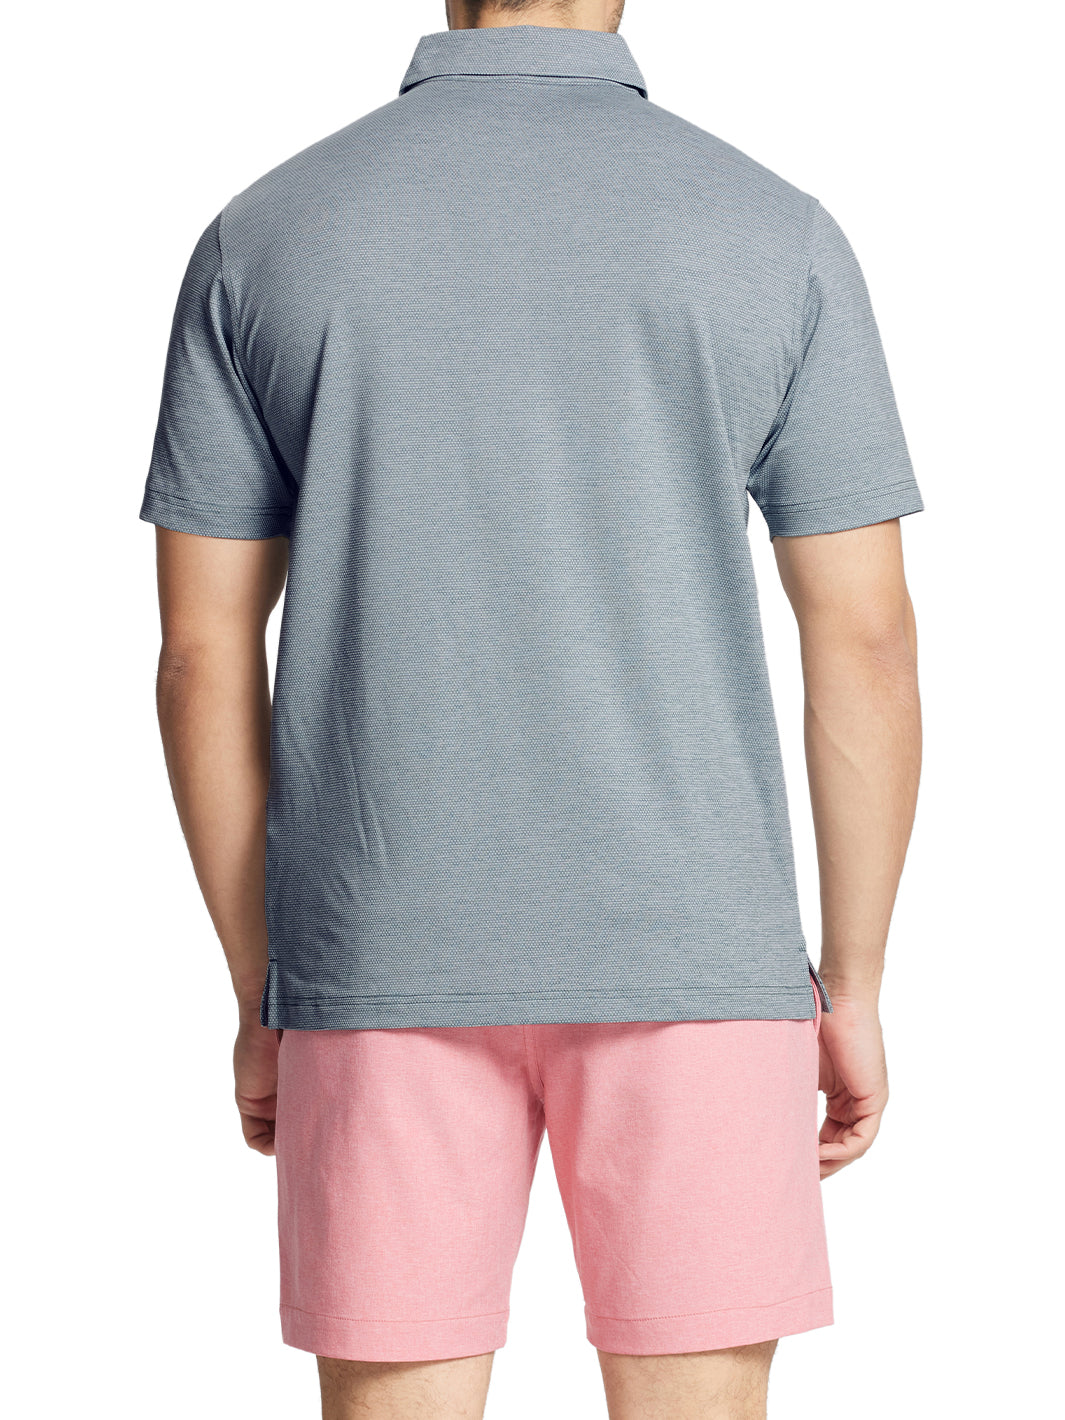 Men's Dry Fit Jacquard Golf Shirts-Slate Green Heather